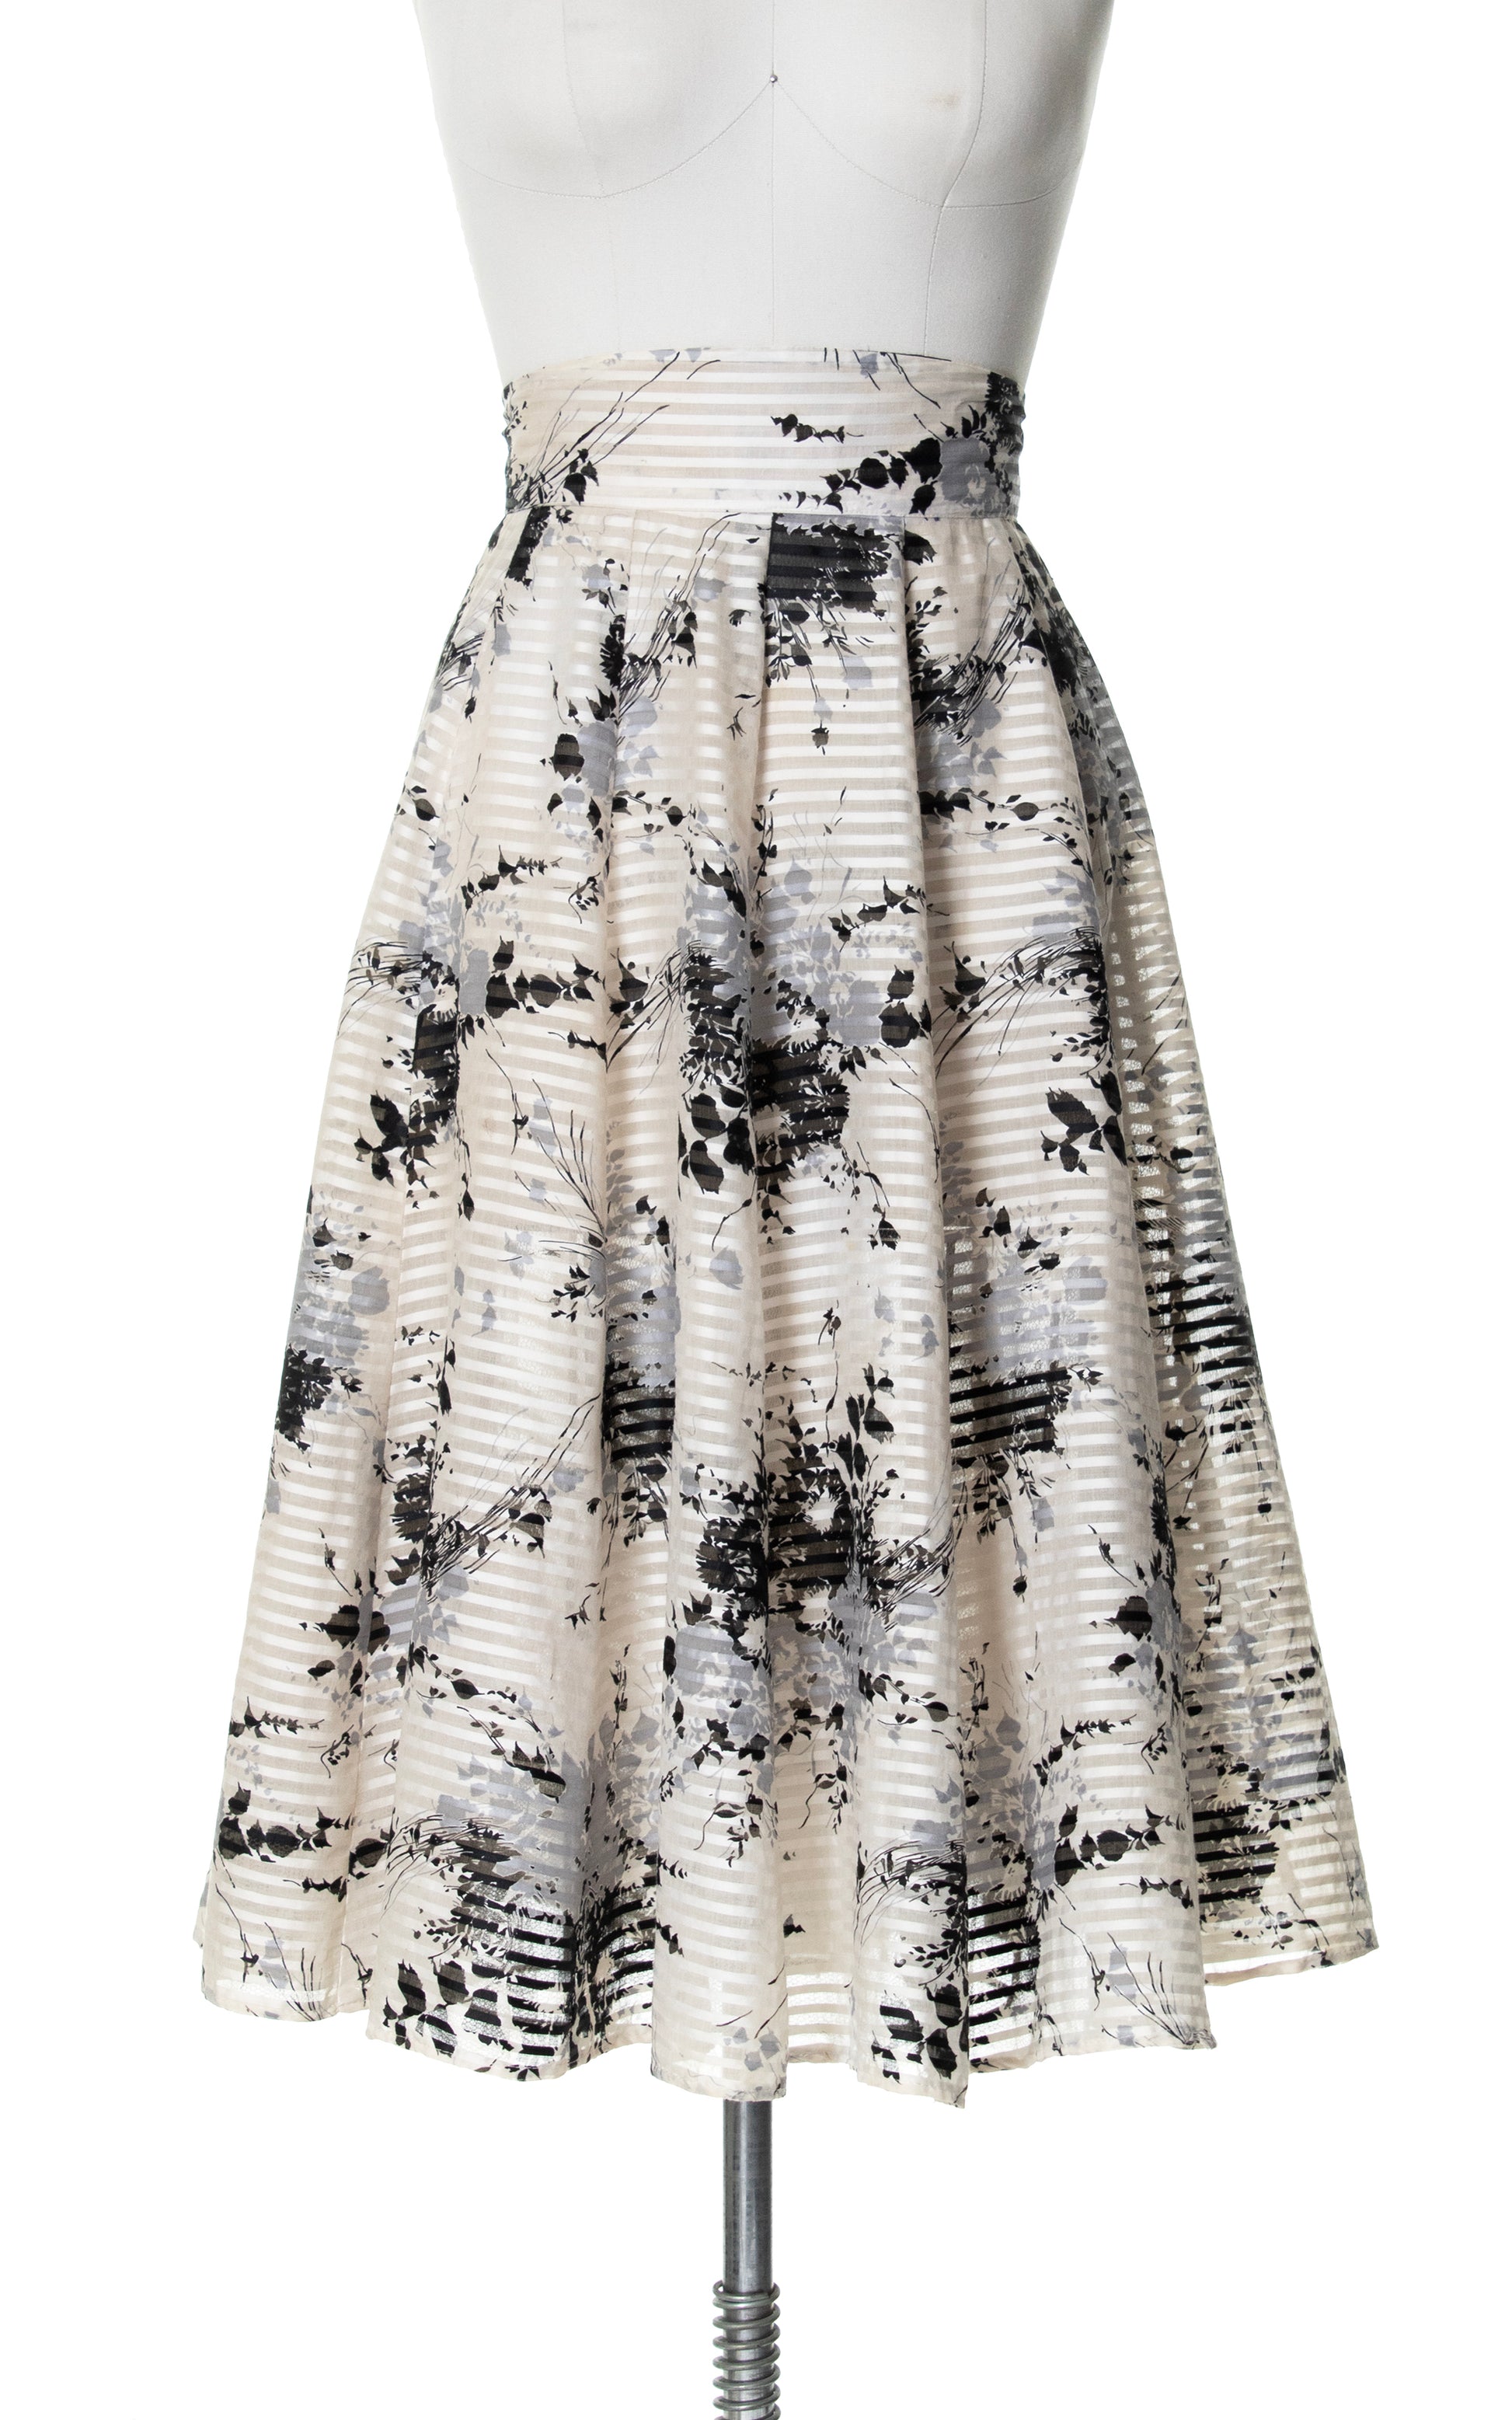 Vintage 50s 1950s Foliage Printed Cotton Full Swing Skirt High Waisted Tulle Petticoat BirthdayLifeVintage